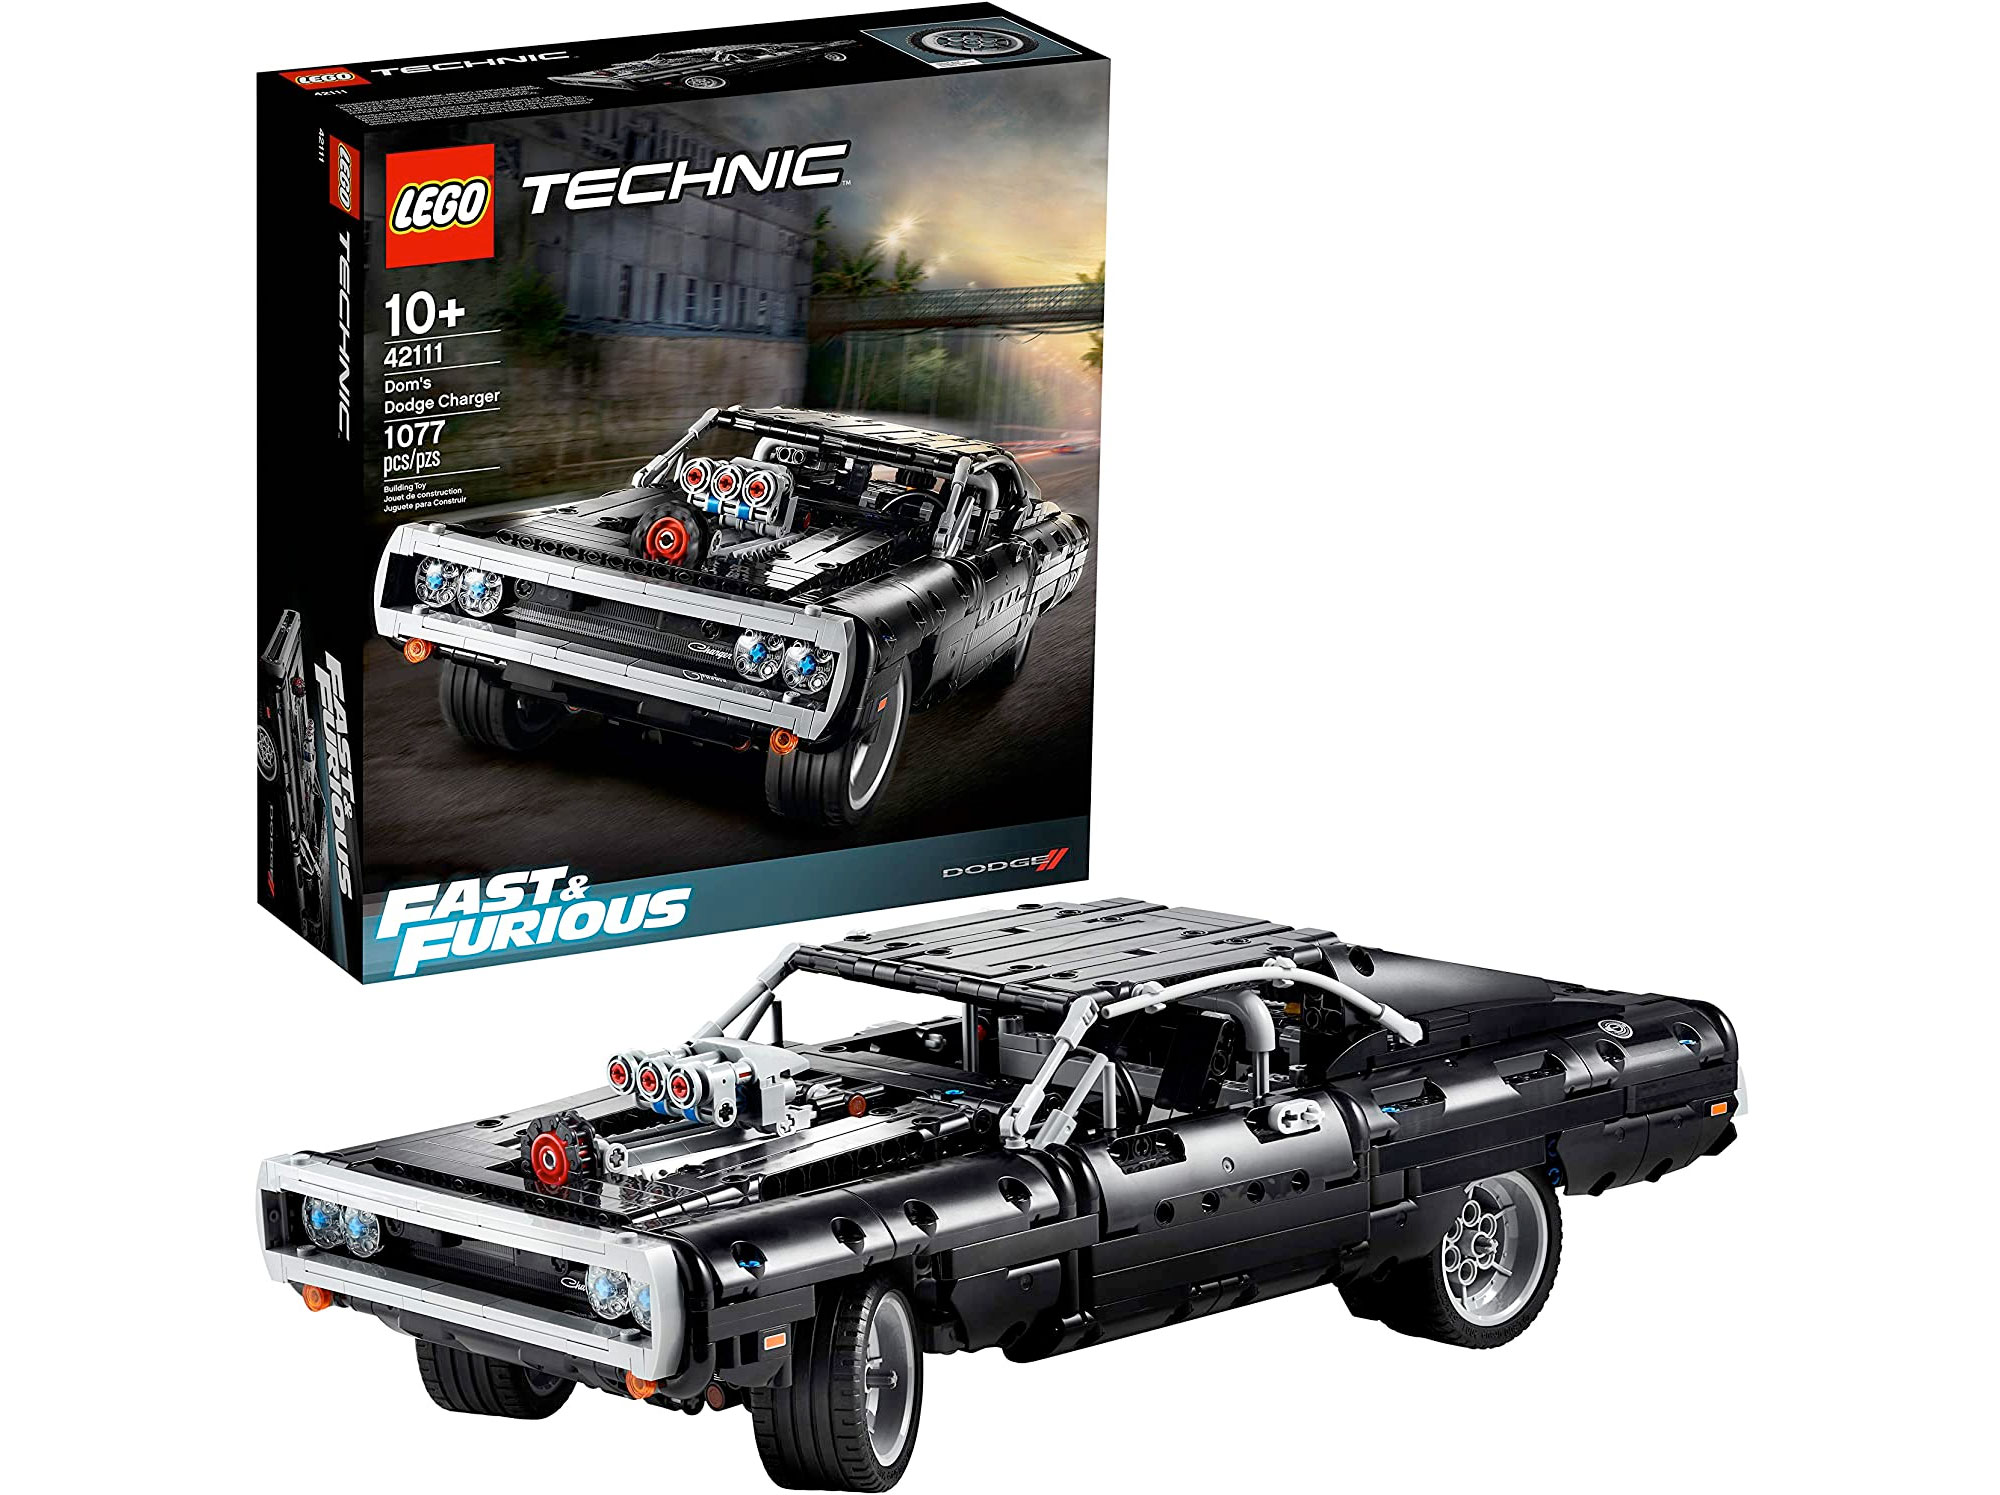 Amazon：LEGO Technic Fast & Furious Dom’s Dodge Charger 42111 (1077 pcs)只賣$118.97